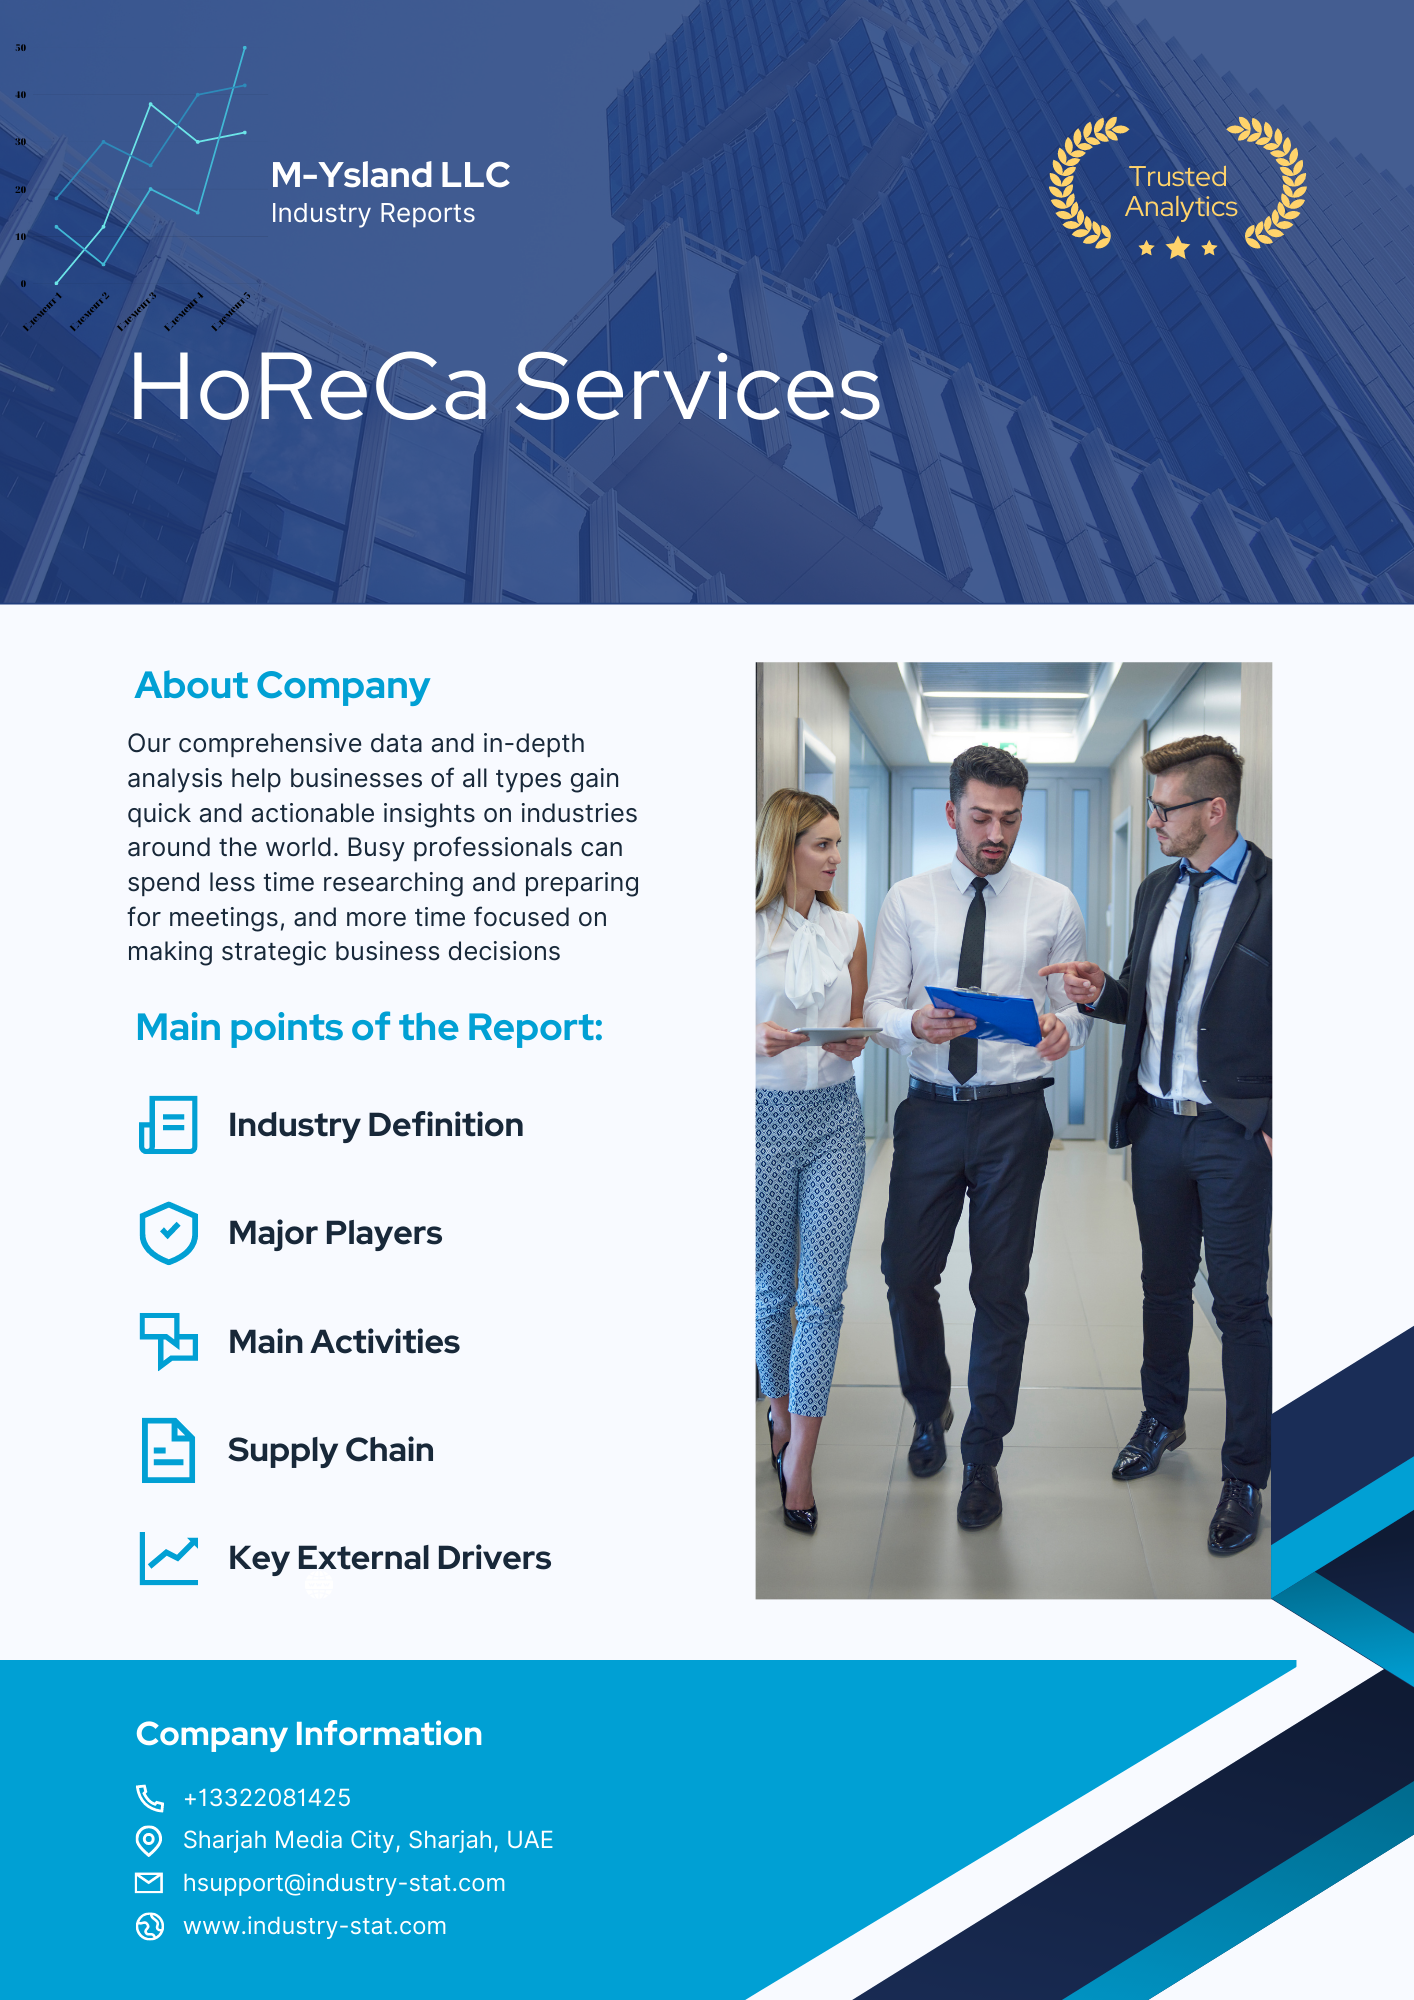 HoReCa Services